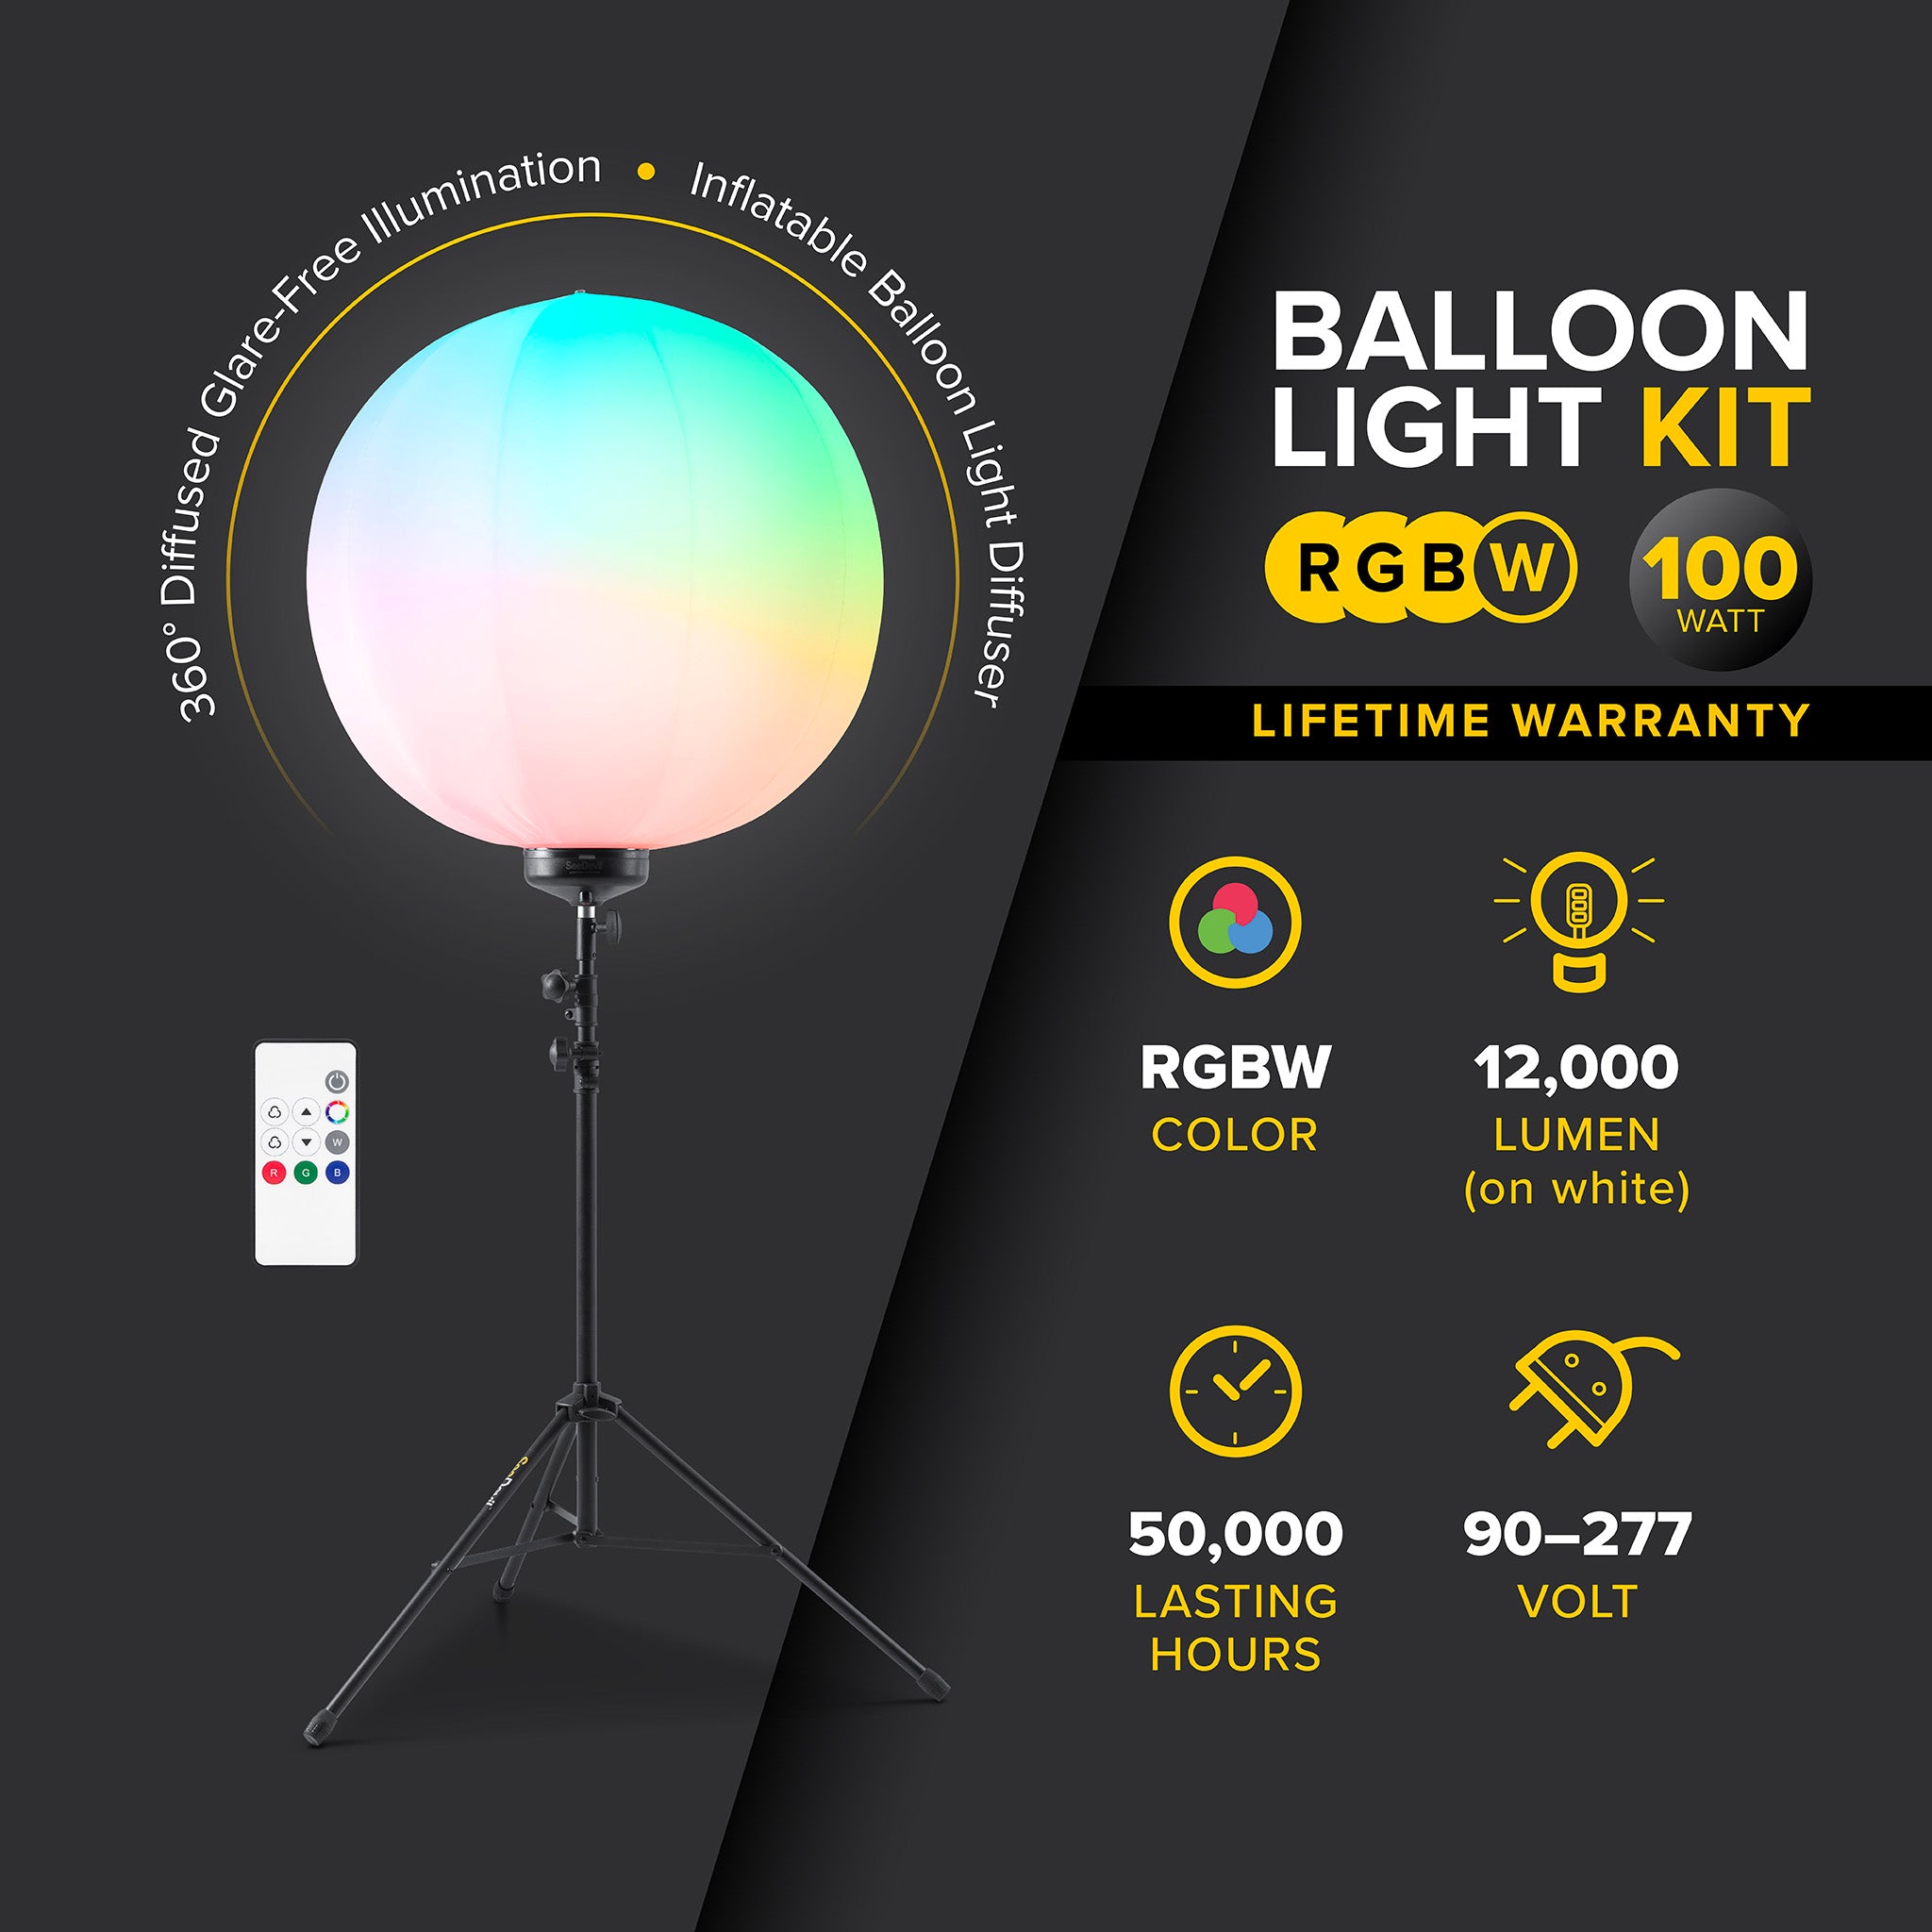 G3 - RGBW 100 Watt Color Changing LED Balloon Light Kit (NEW)